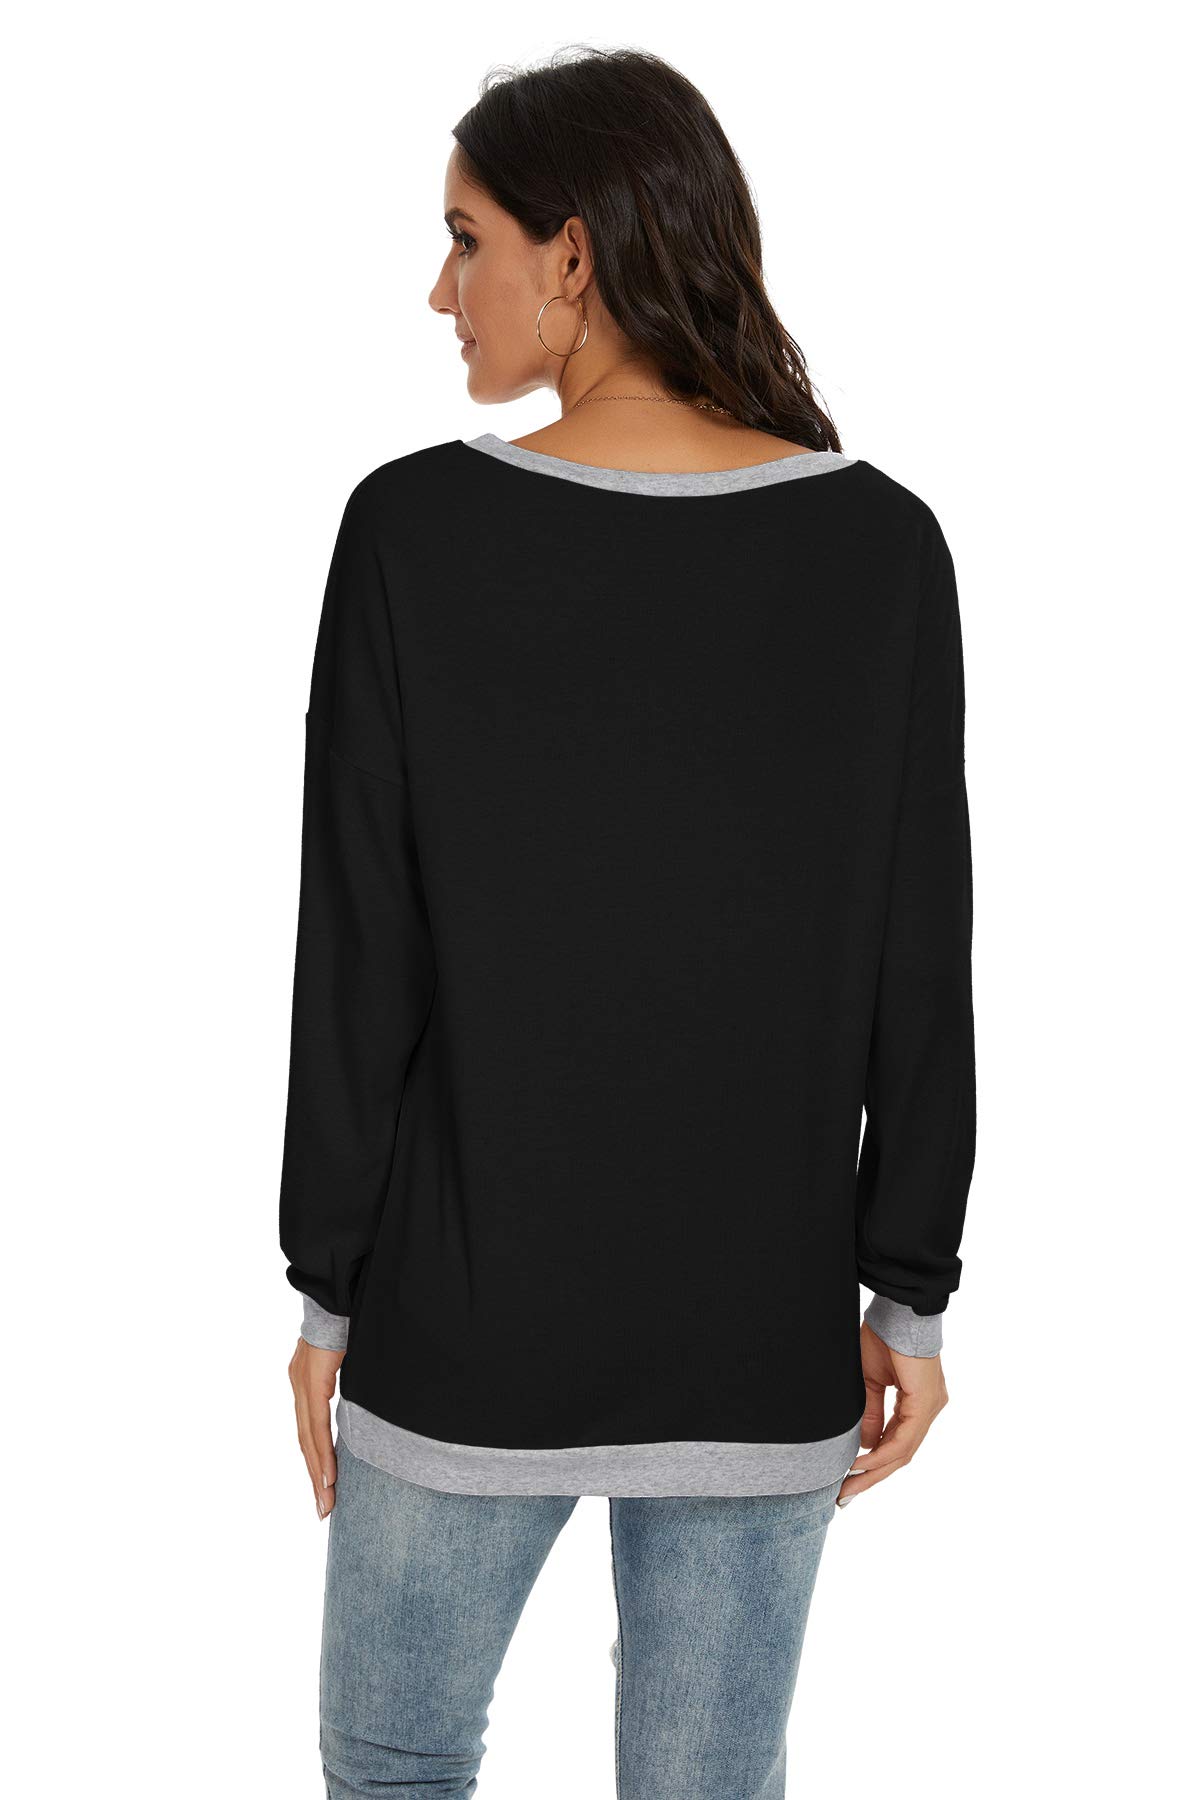 JINKESI Women Long Sleeve Tops Color Block Sweatshirts Round Neck Loose Tunic Top Black-Large